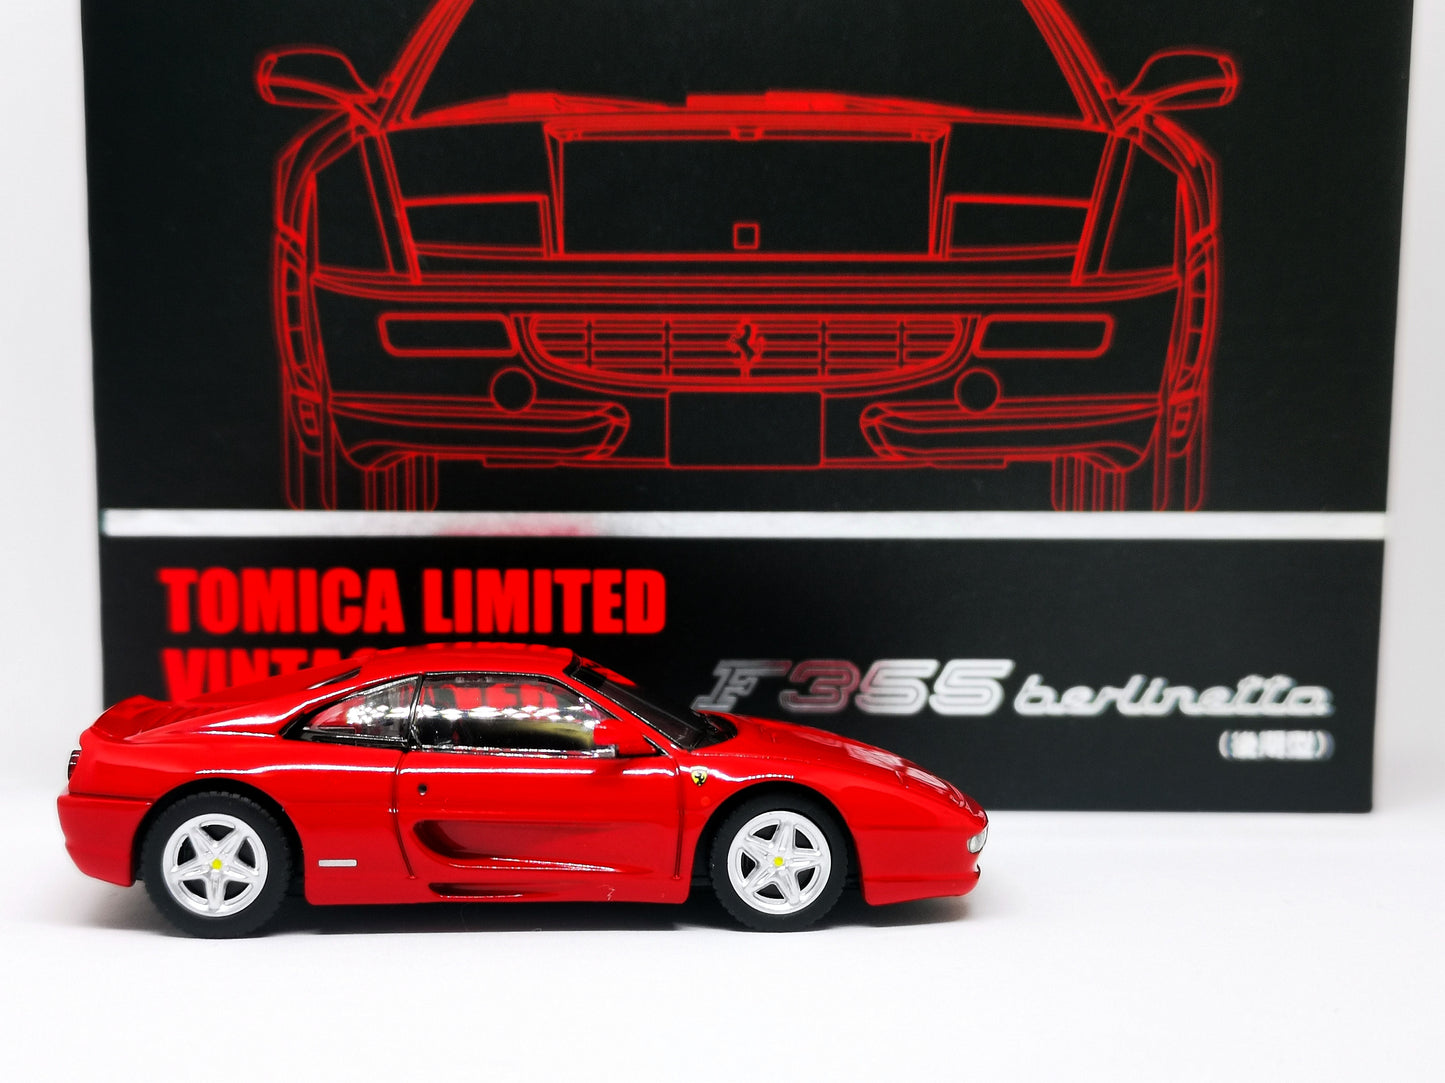 Tomica Limited Vintage Neo
Ferrari F355